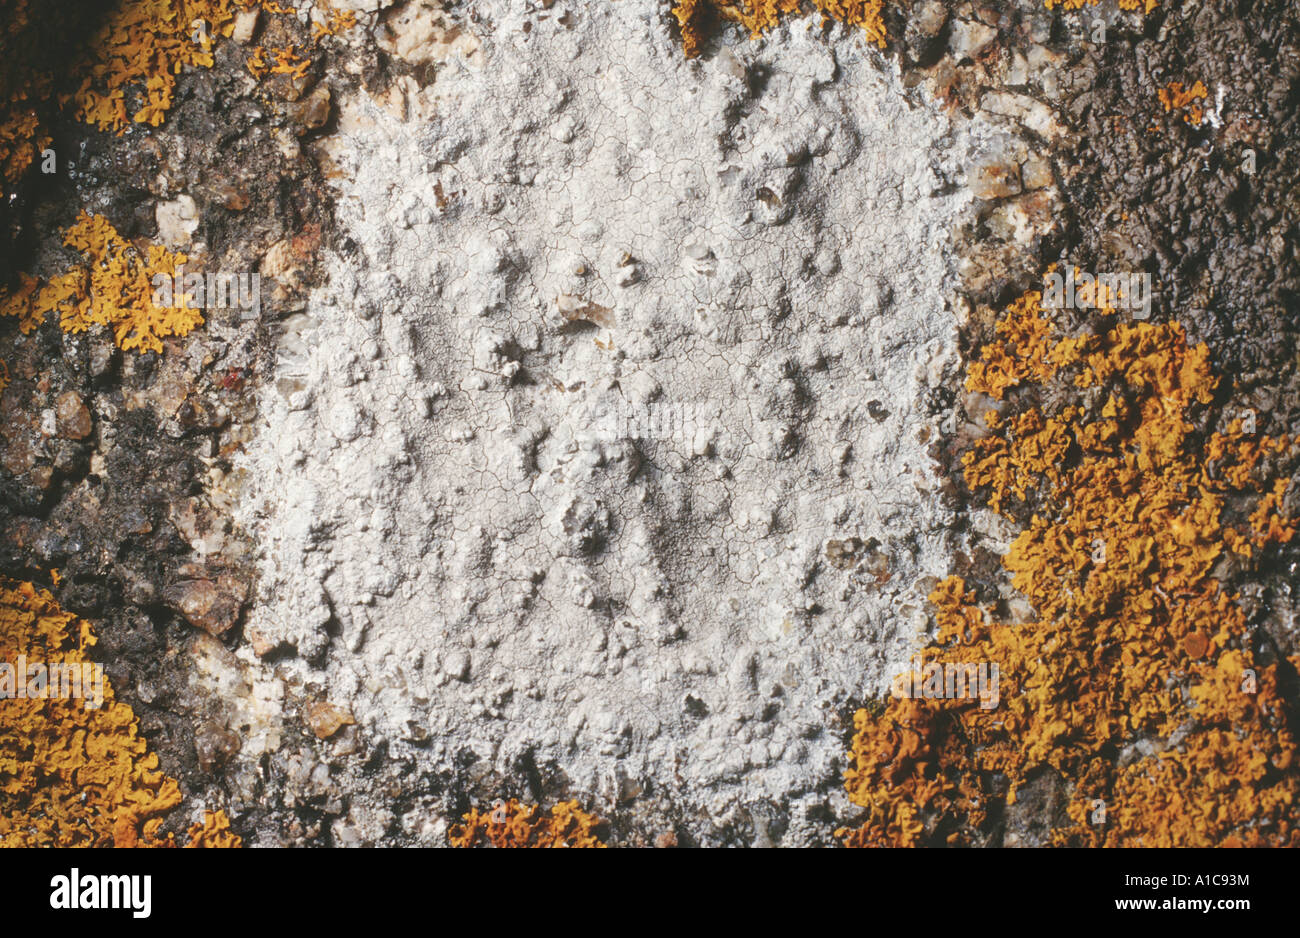 lichen (Ochrolechia leuca), on rock Stock Photo